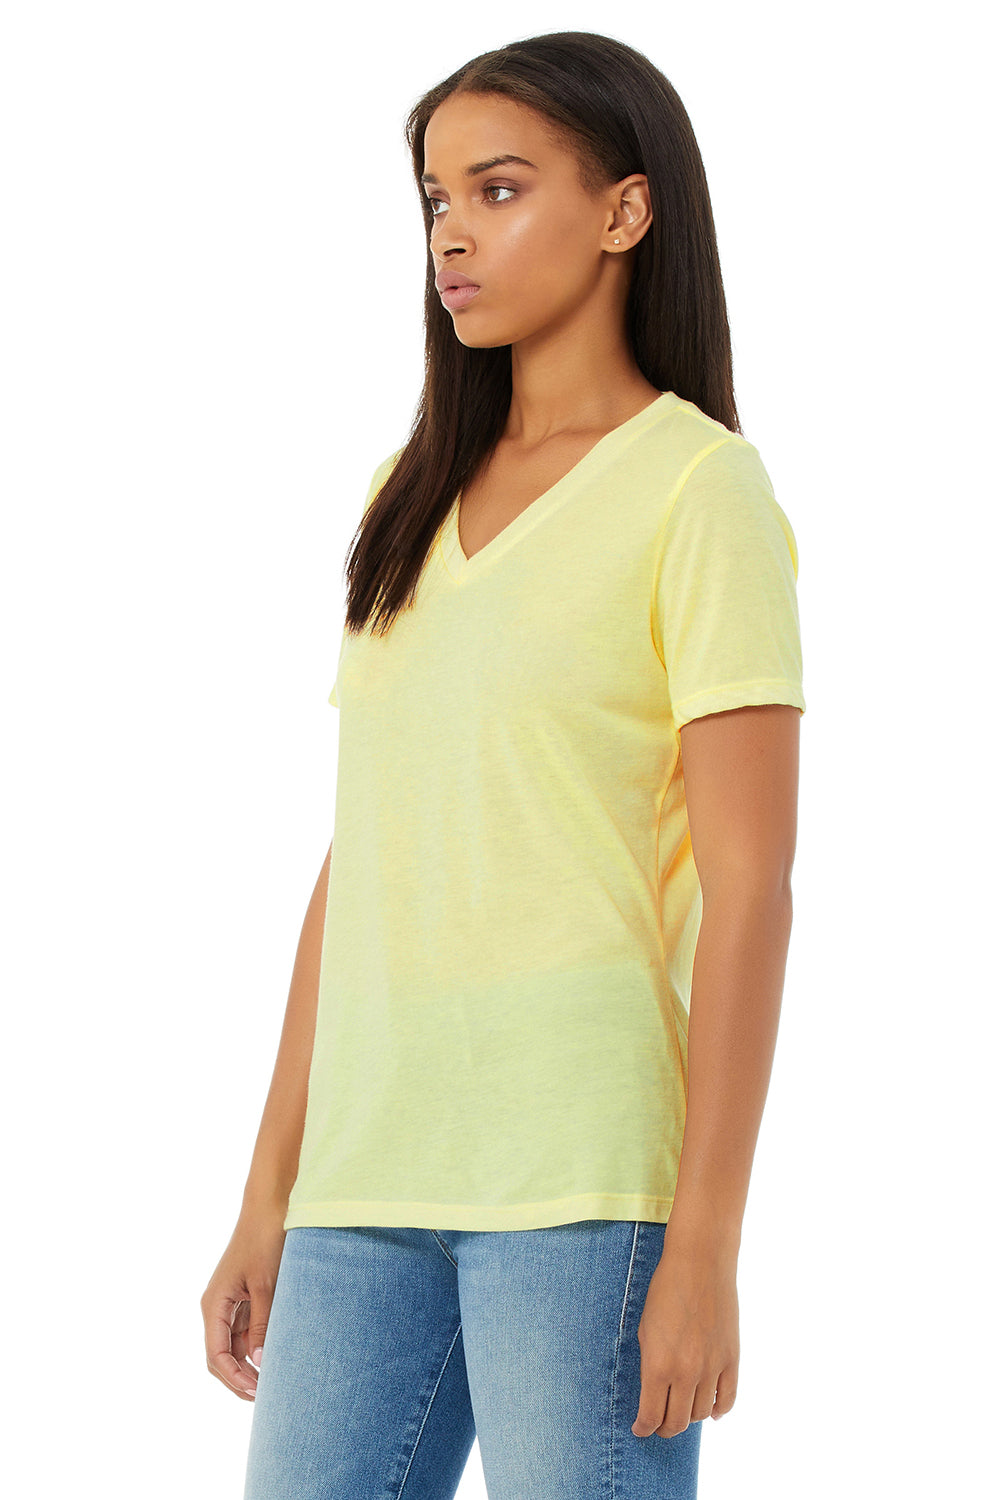 Bella + Canvas BC6415 Womens Short Sleeve V-Neck T-Shirt Pale Yellow Model 3Q